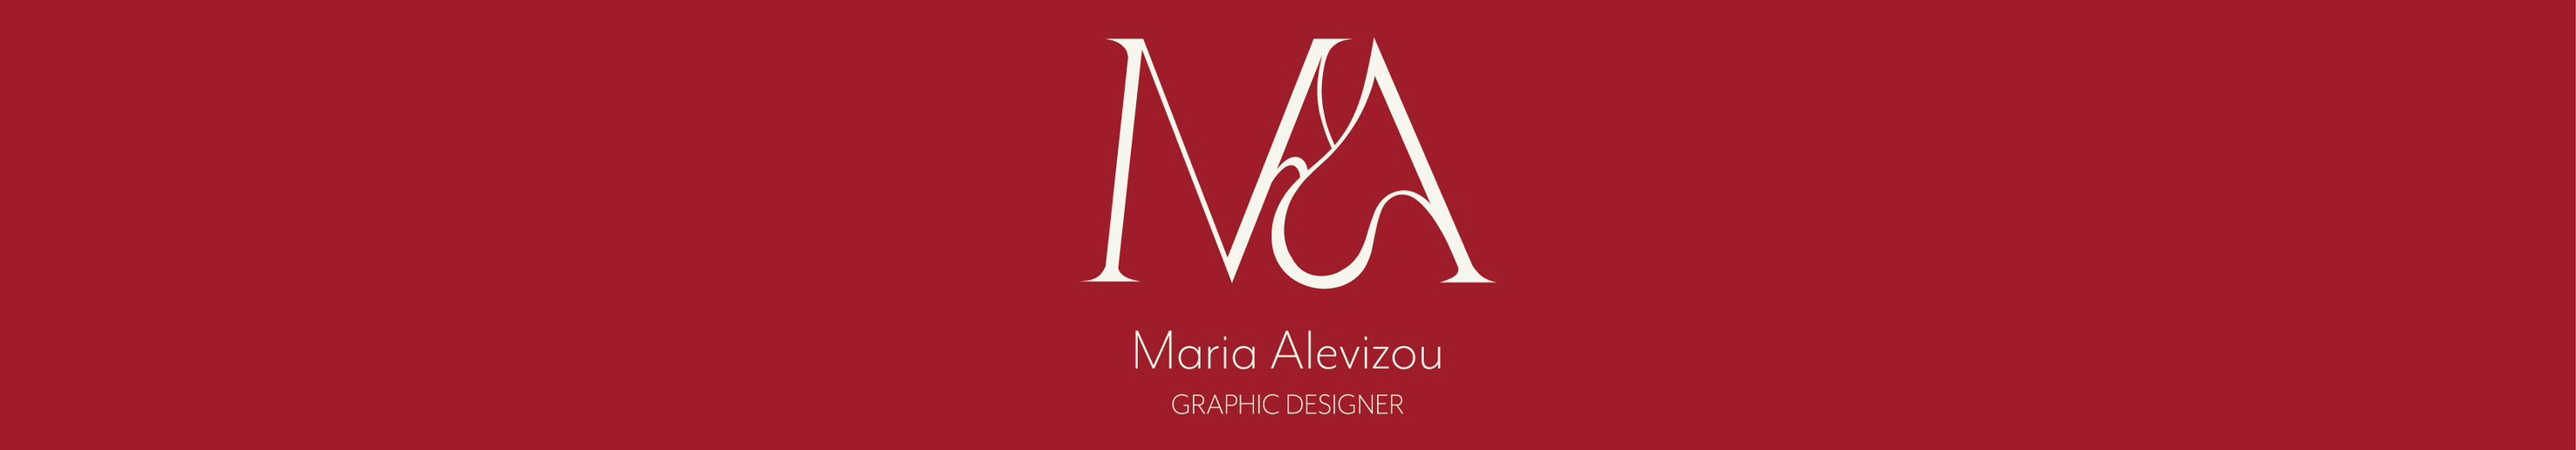 Maria Alevizou's profile banner